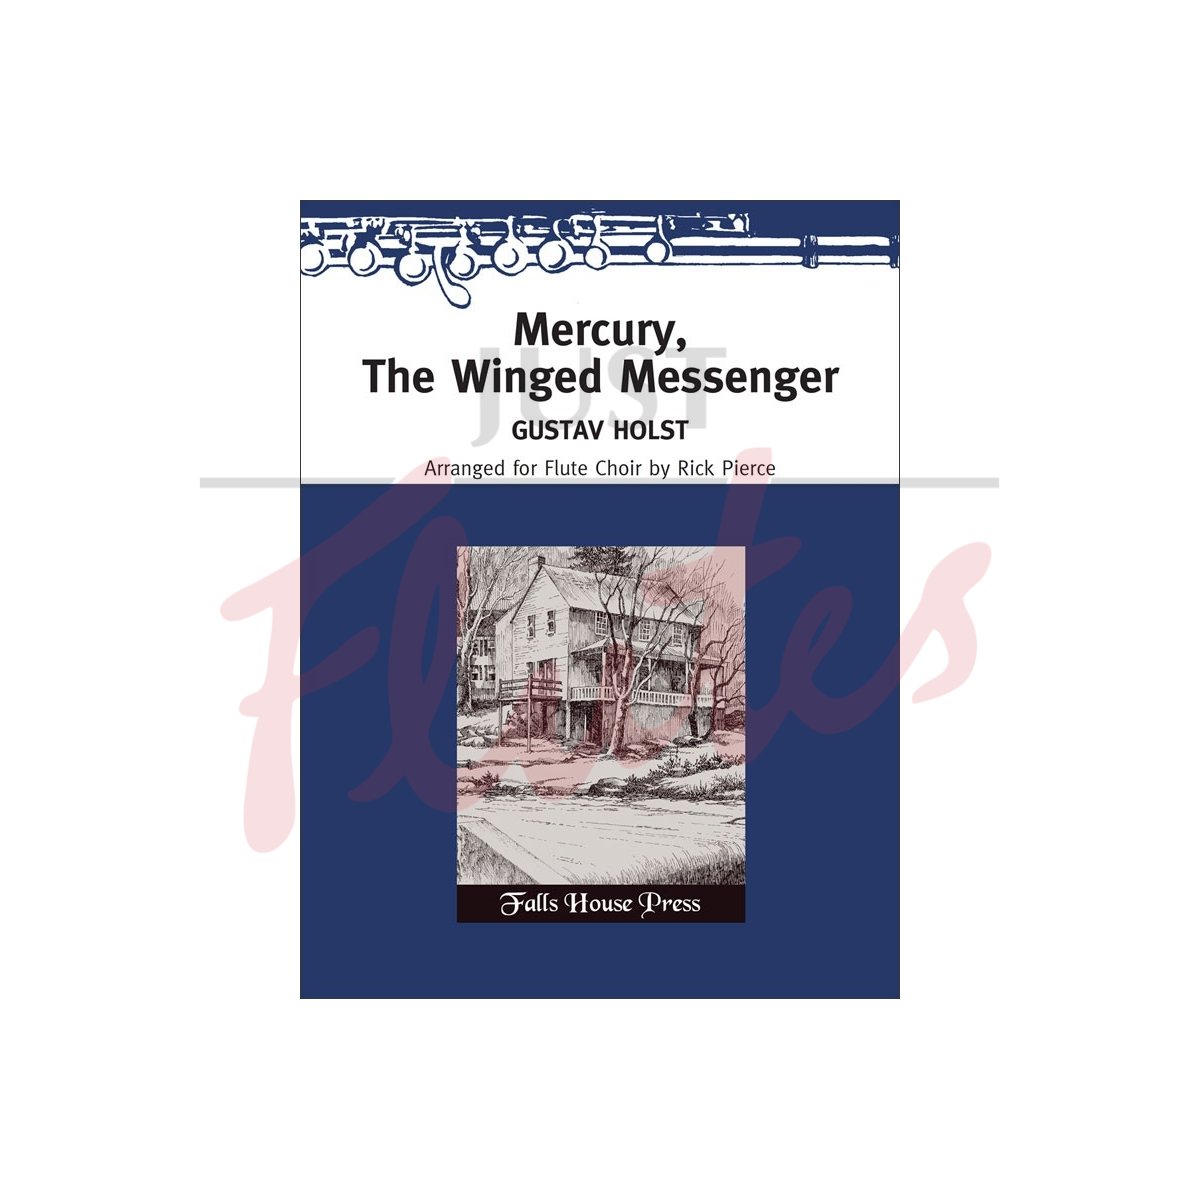 Mercury, The Winged Messenger [Flute Choir]